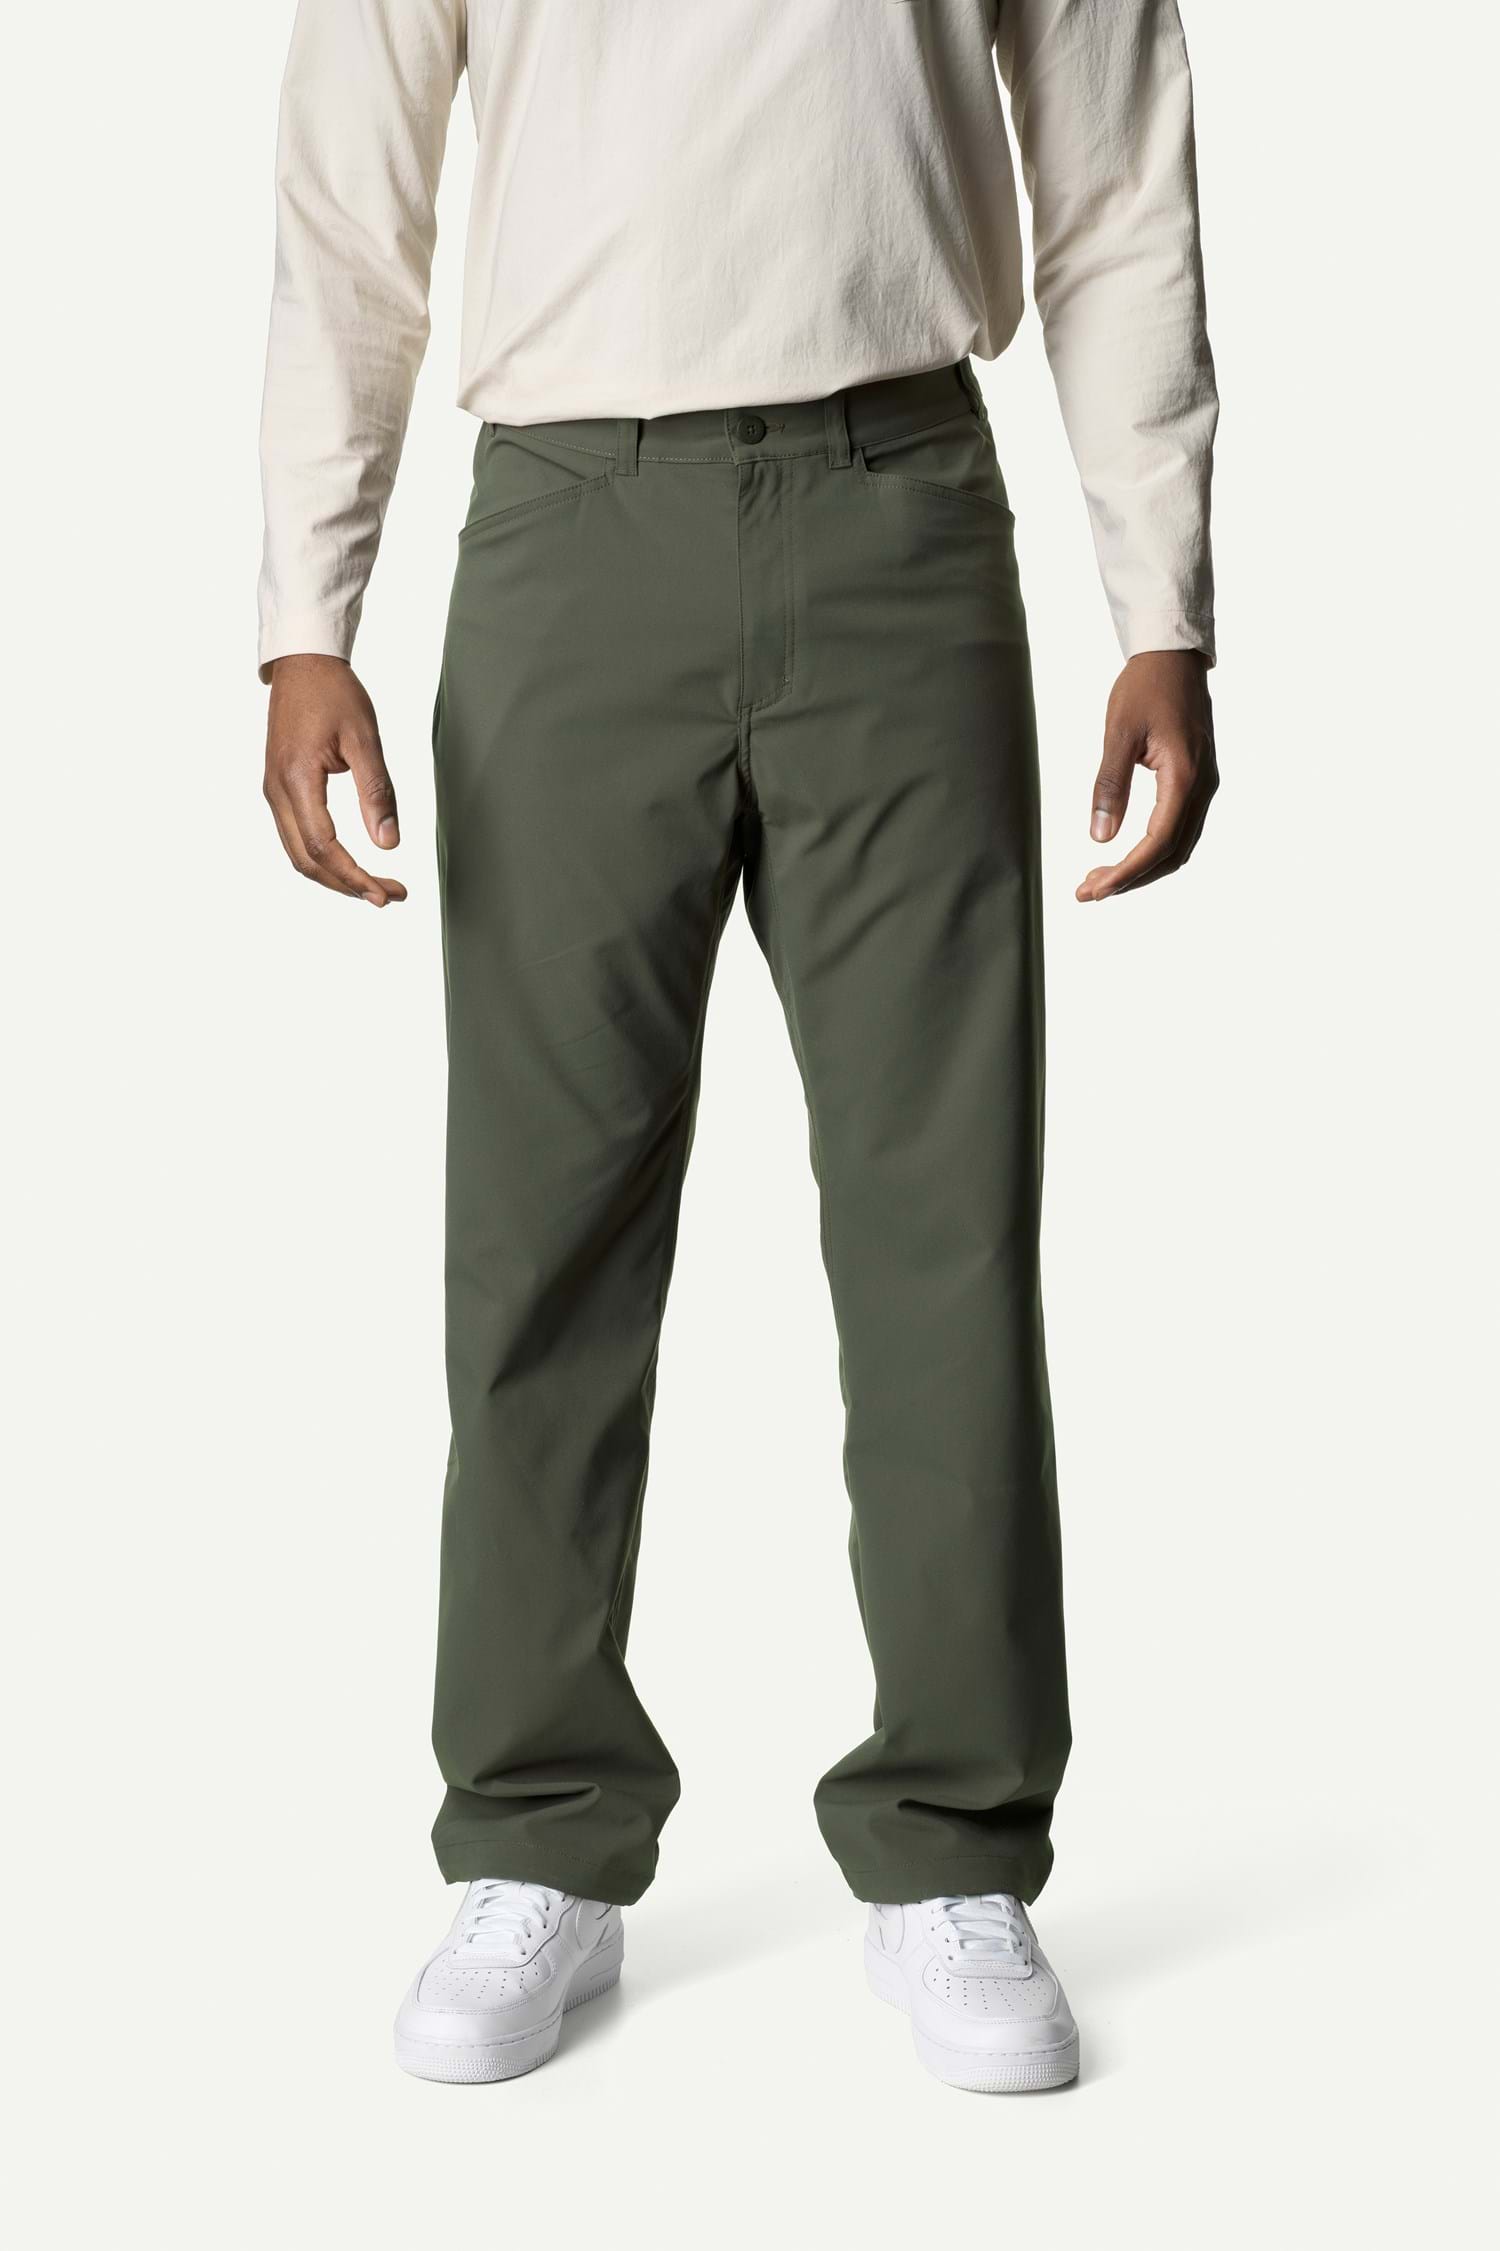 Shop Comfortable Men's Pants | Houdini Sportswear